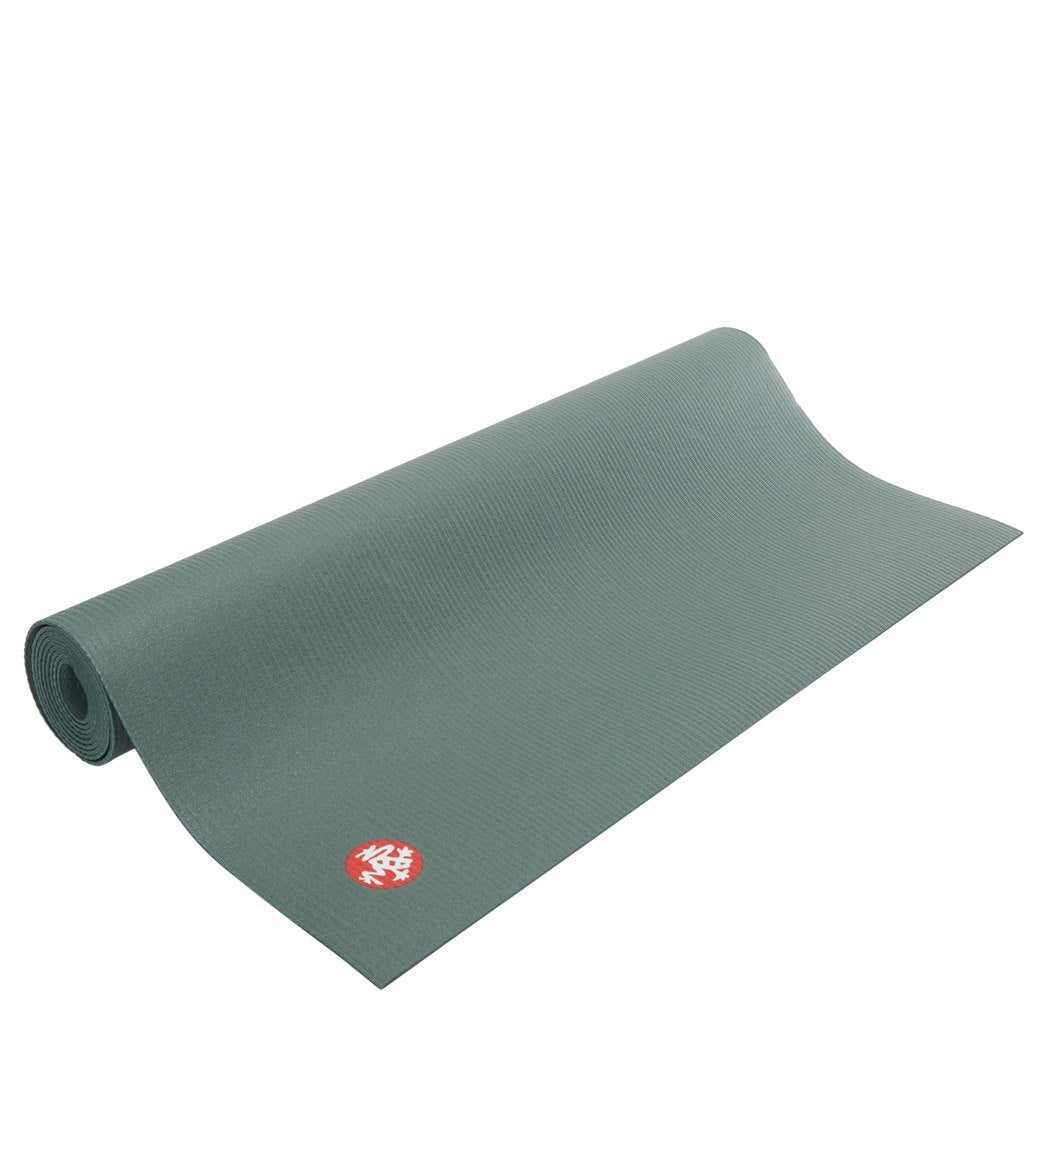 Manduka GRP Yoga Mat 79 5mm at YogaOutlet.com - Free Shipping